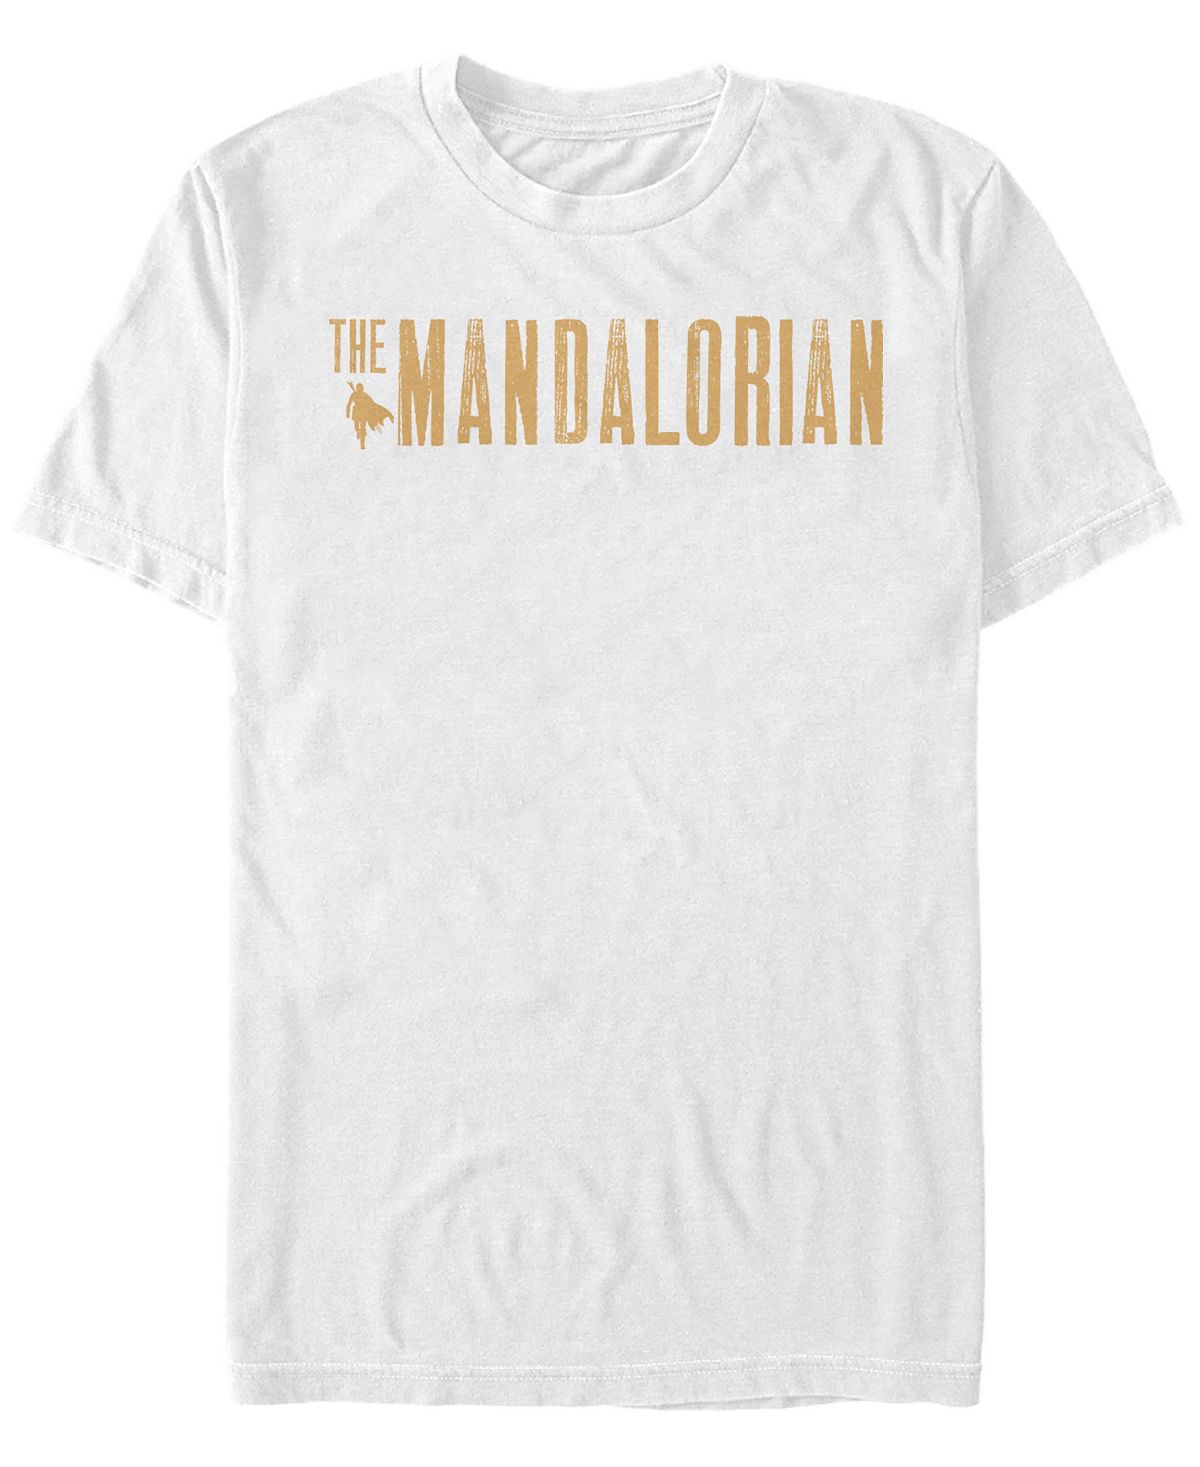 Мужская футболка с коротким рукавом с простым логотипом star wars the mandalorian Fifth Sun, белый фото